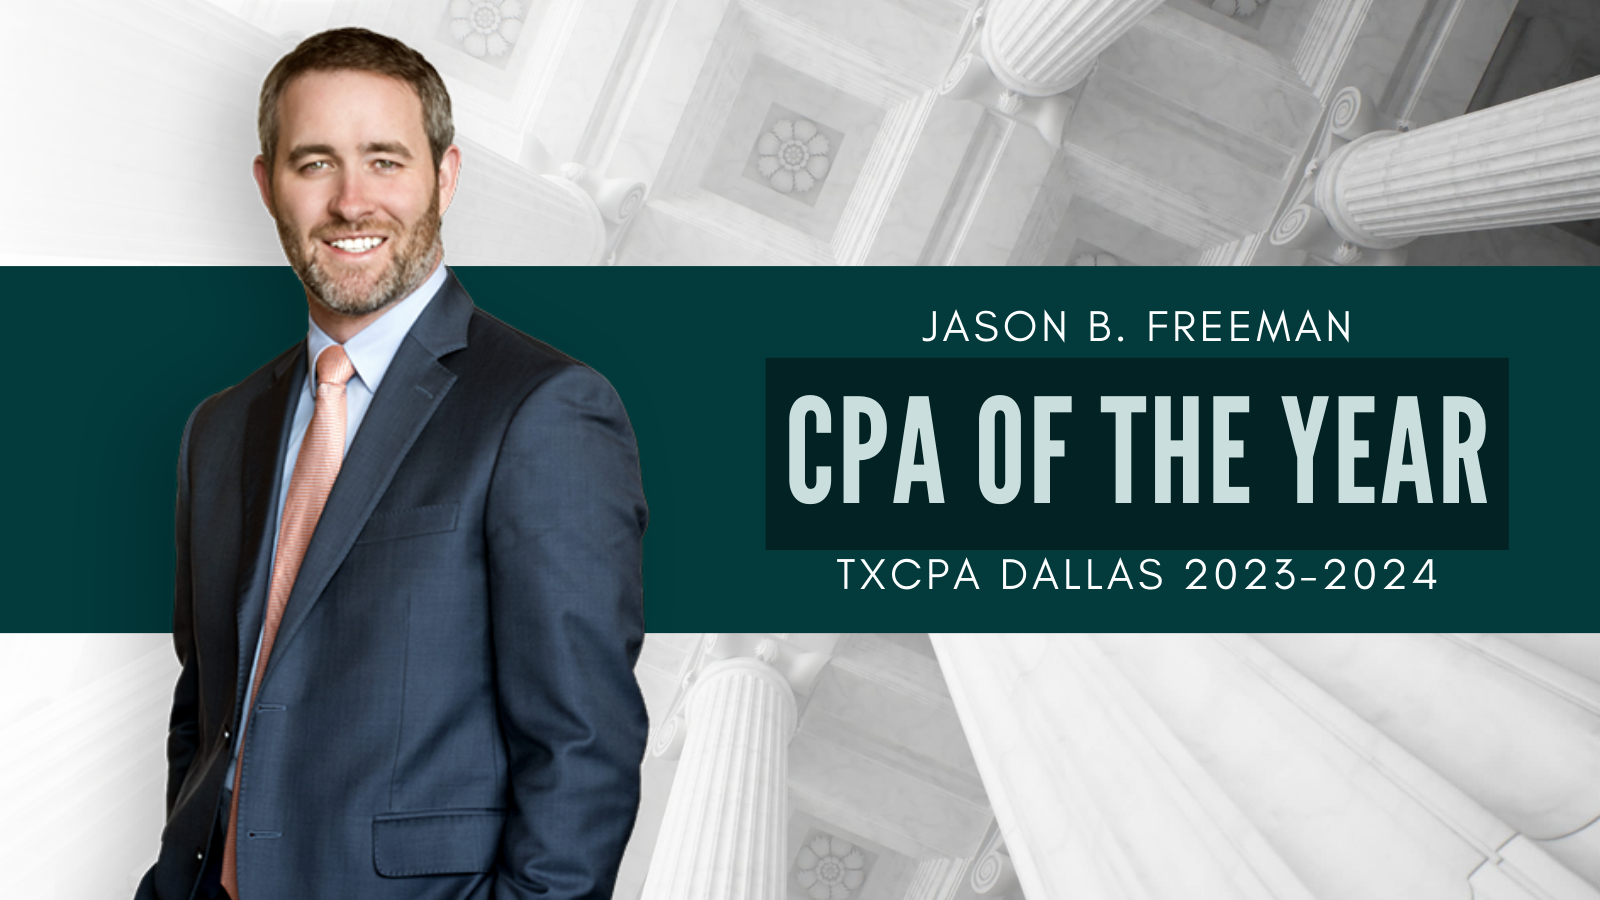 Jason B. Freeman Named "CPA of the Year" by TXCPA Dallas 20232024